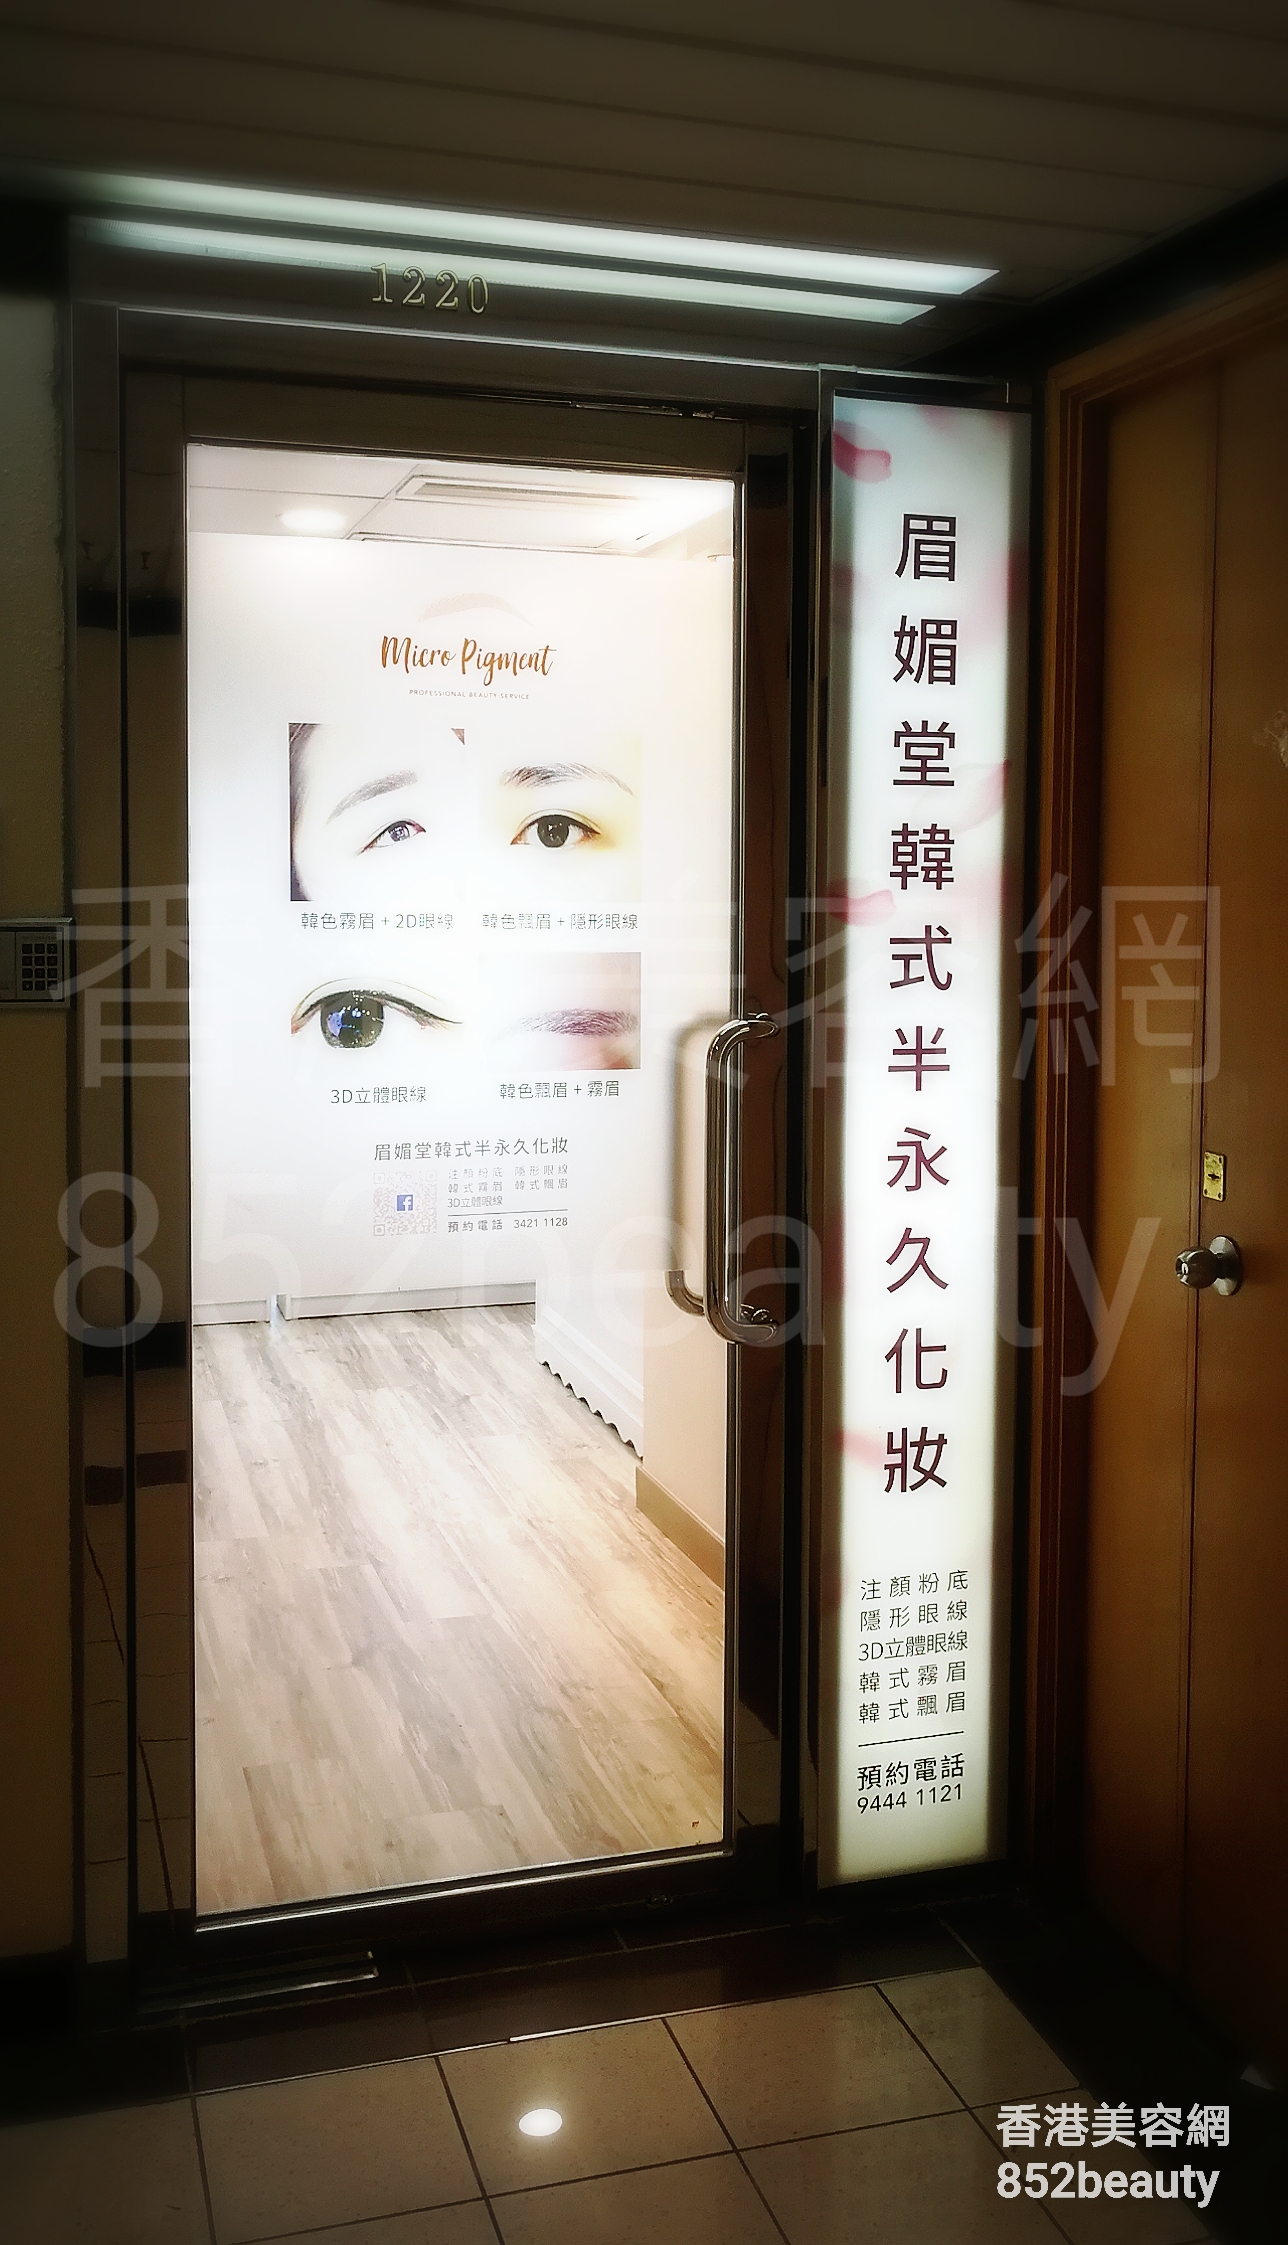 Beauty Salon: Micro Pigment 眉媚堂